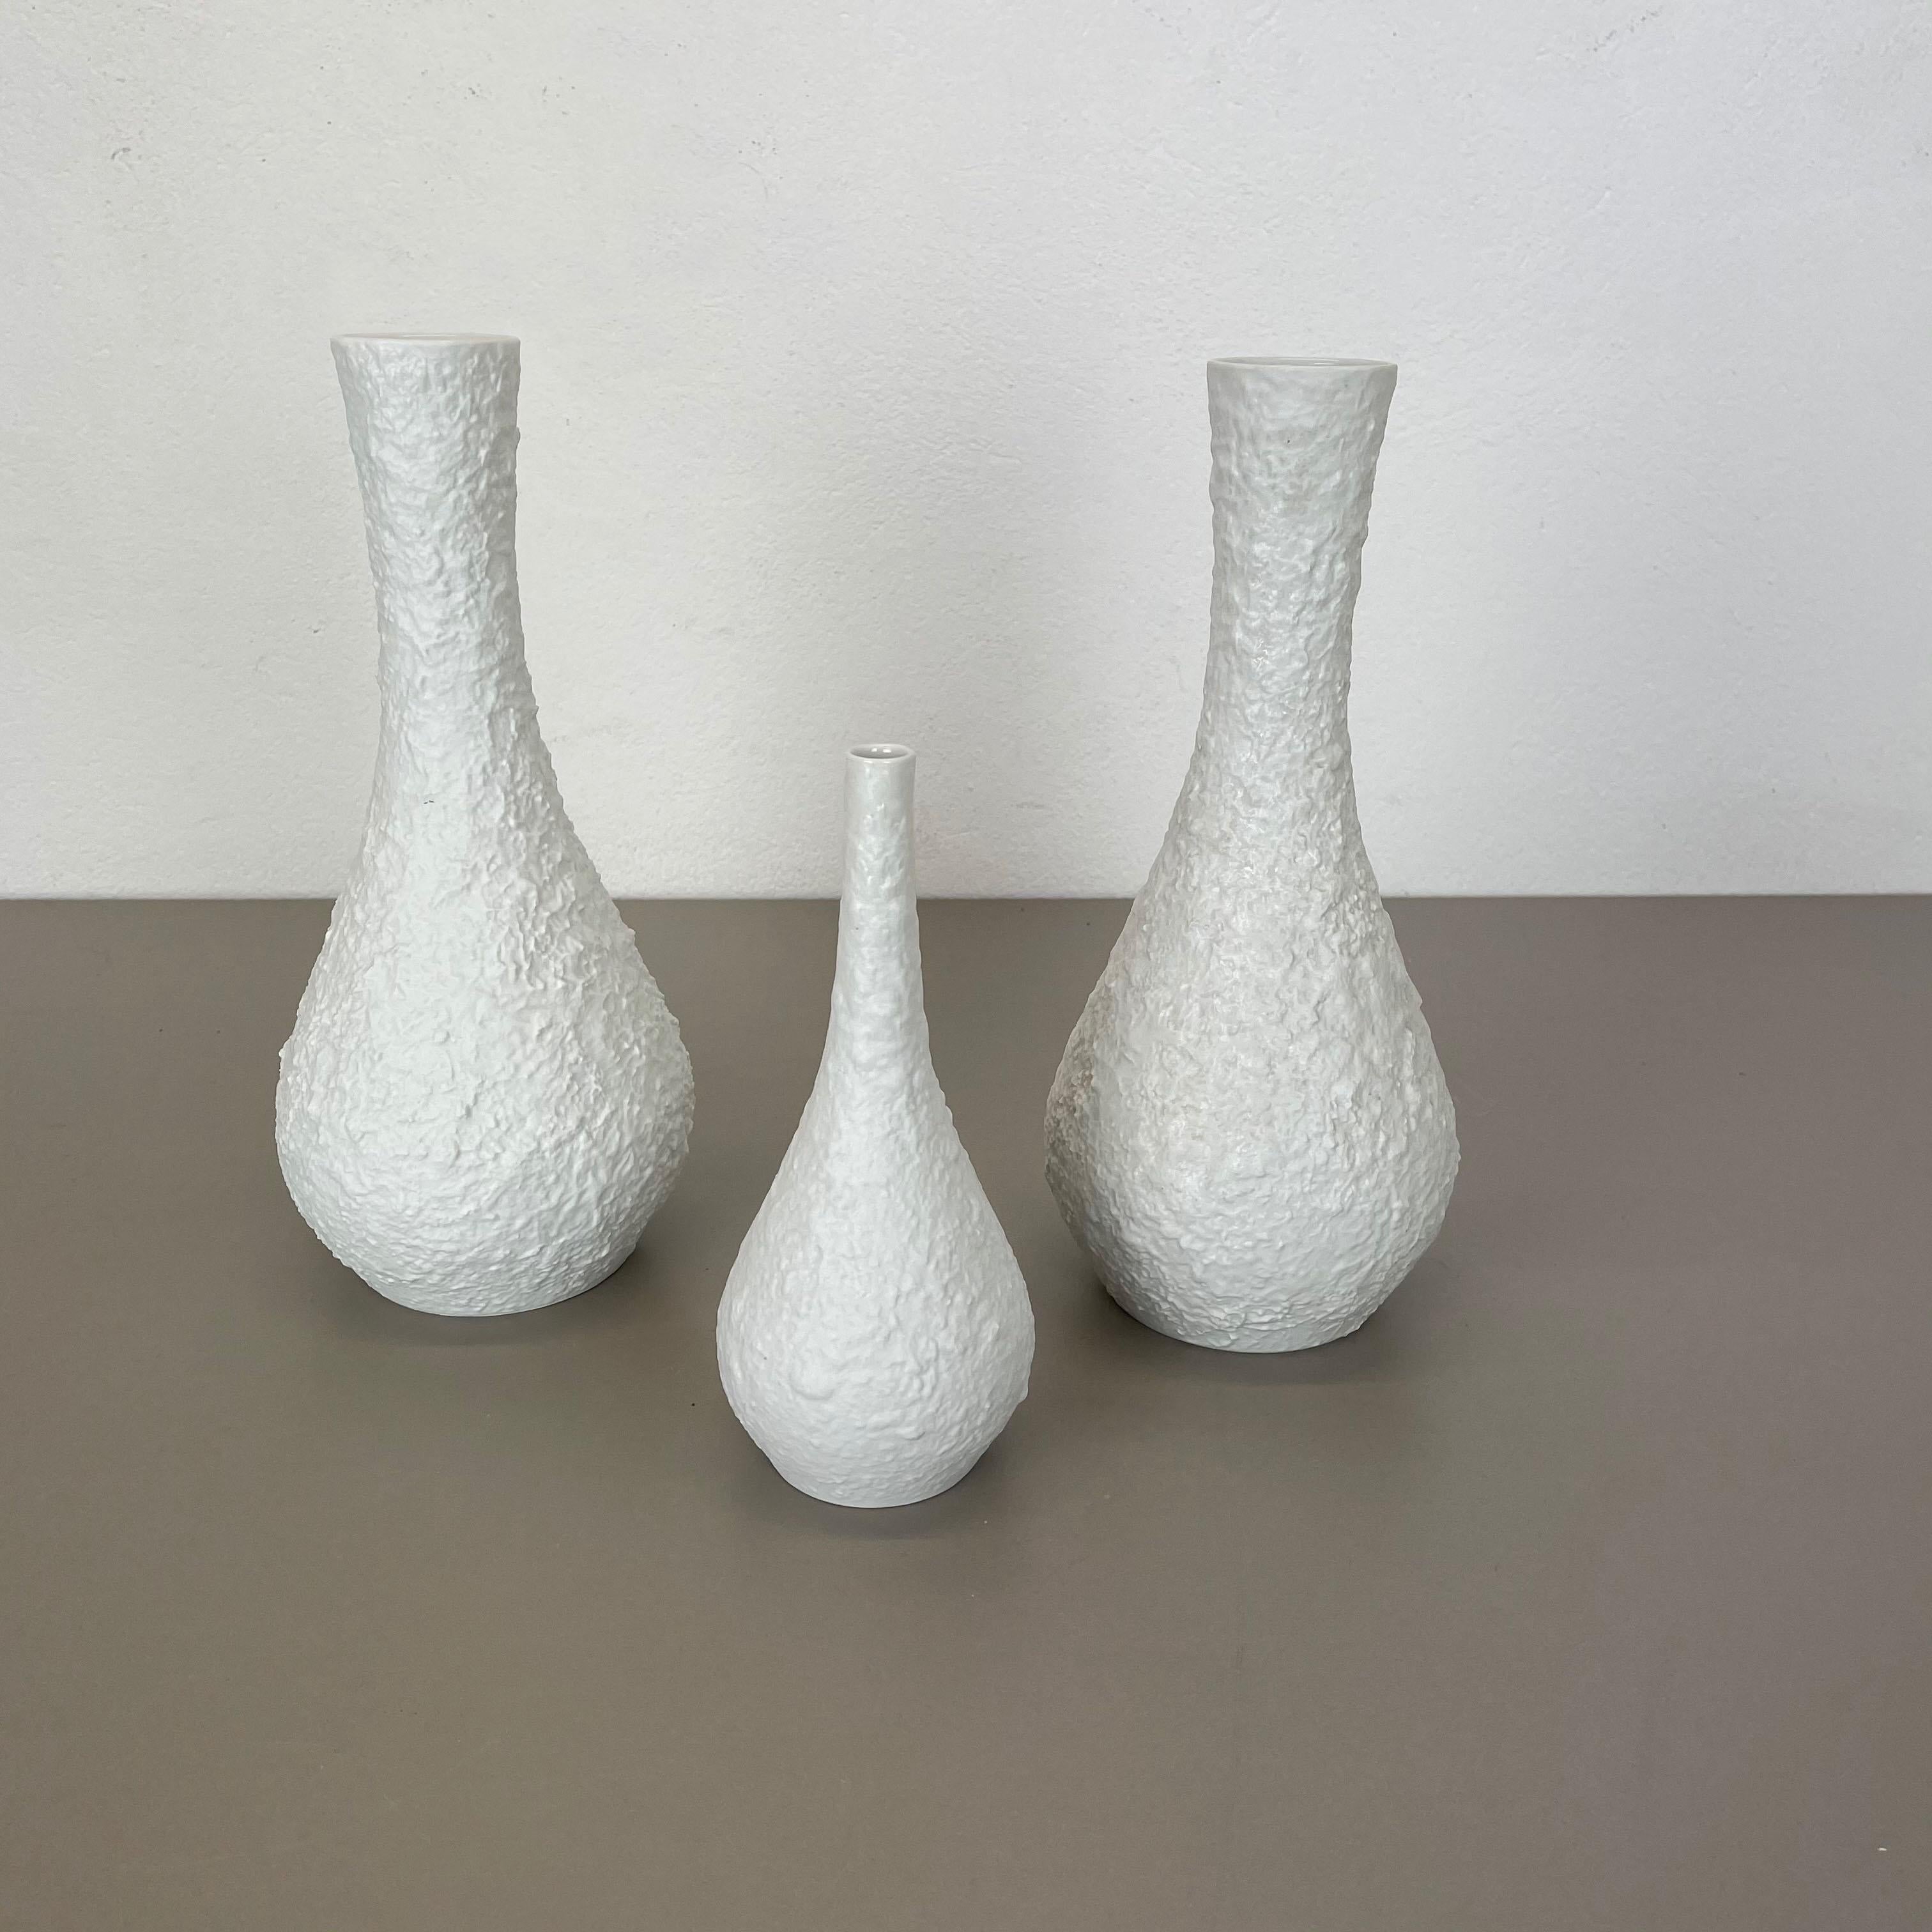 Set of 3 OP Art Biscuit Porcelain Vases by Edelstein Bavaria, Germany, 1970s For Sale 6